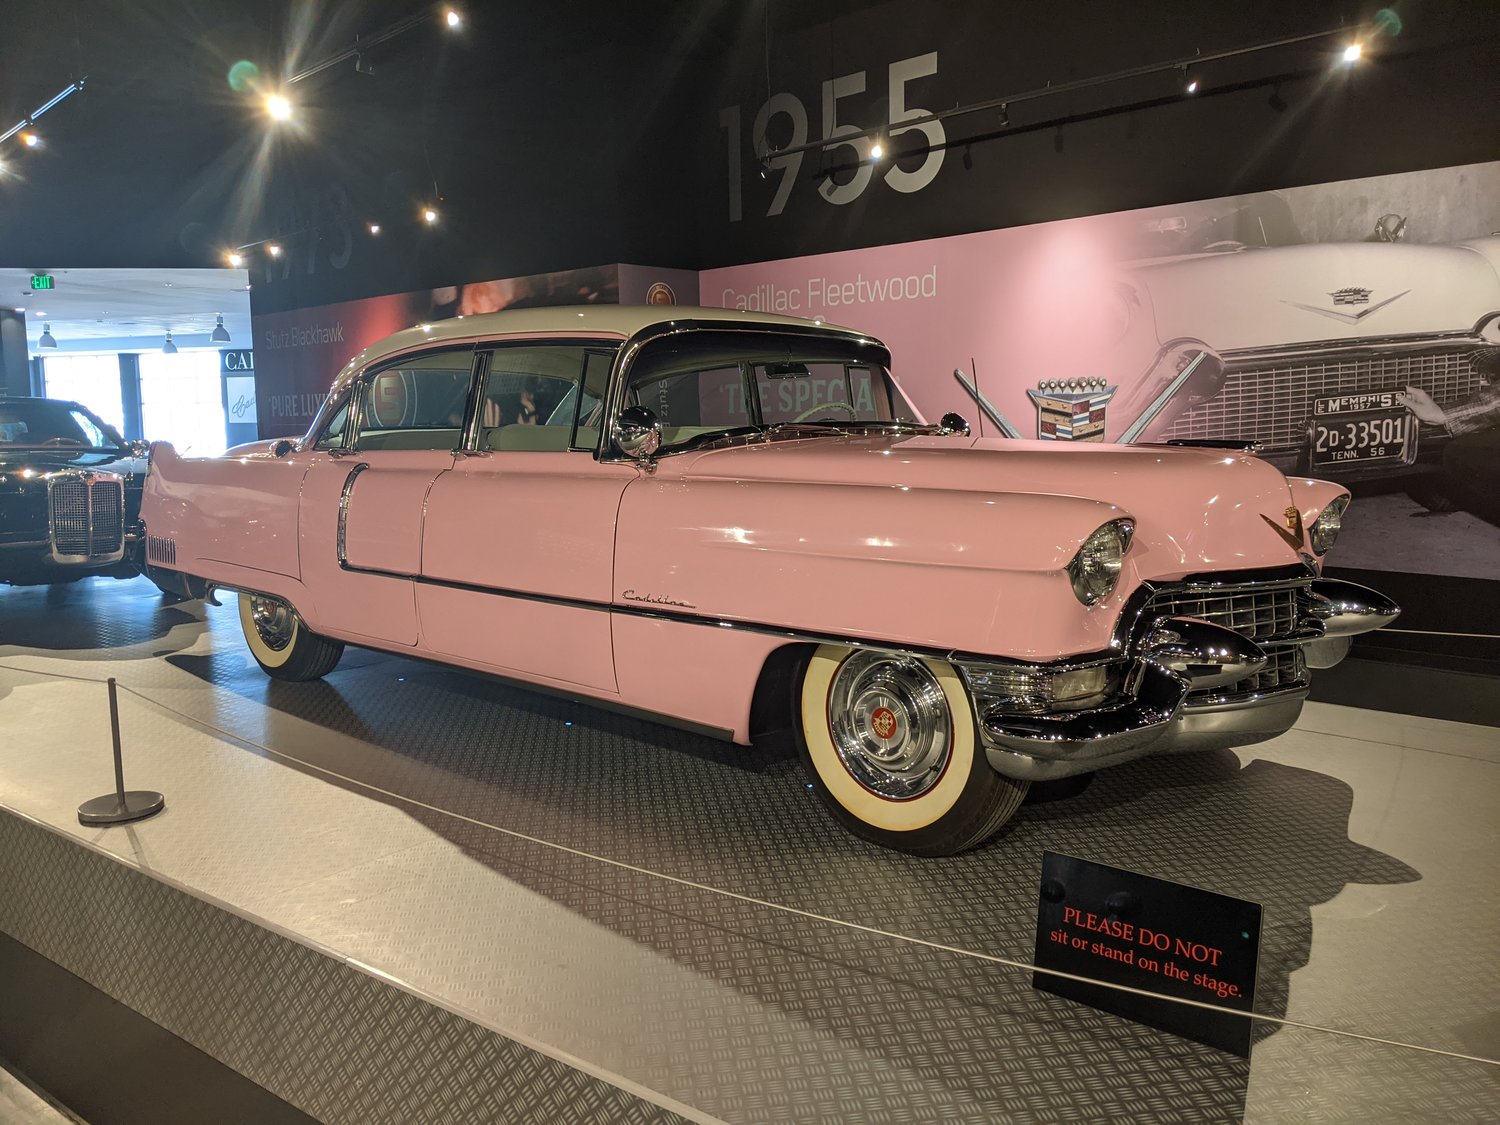 Elvis's pink Cadillac